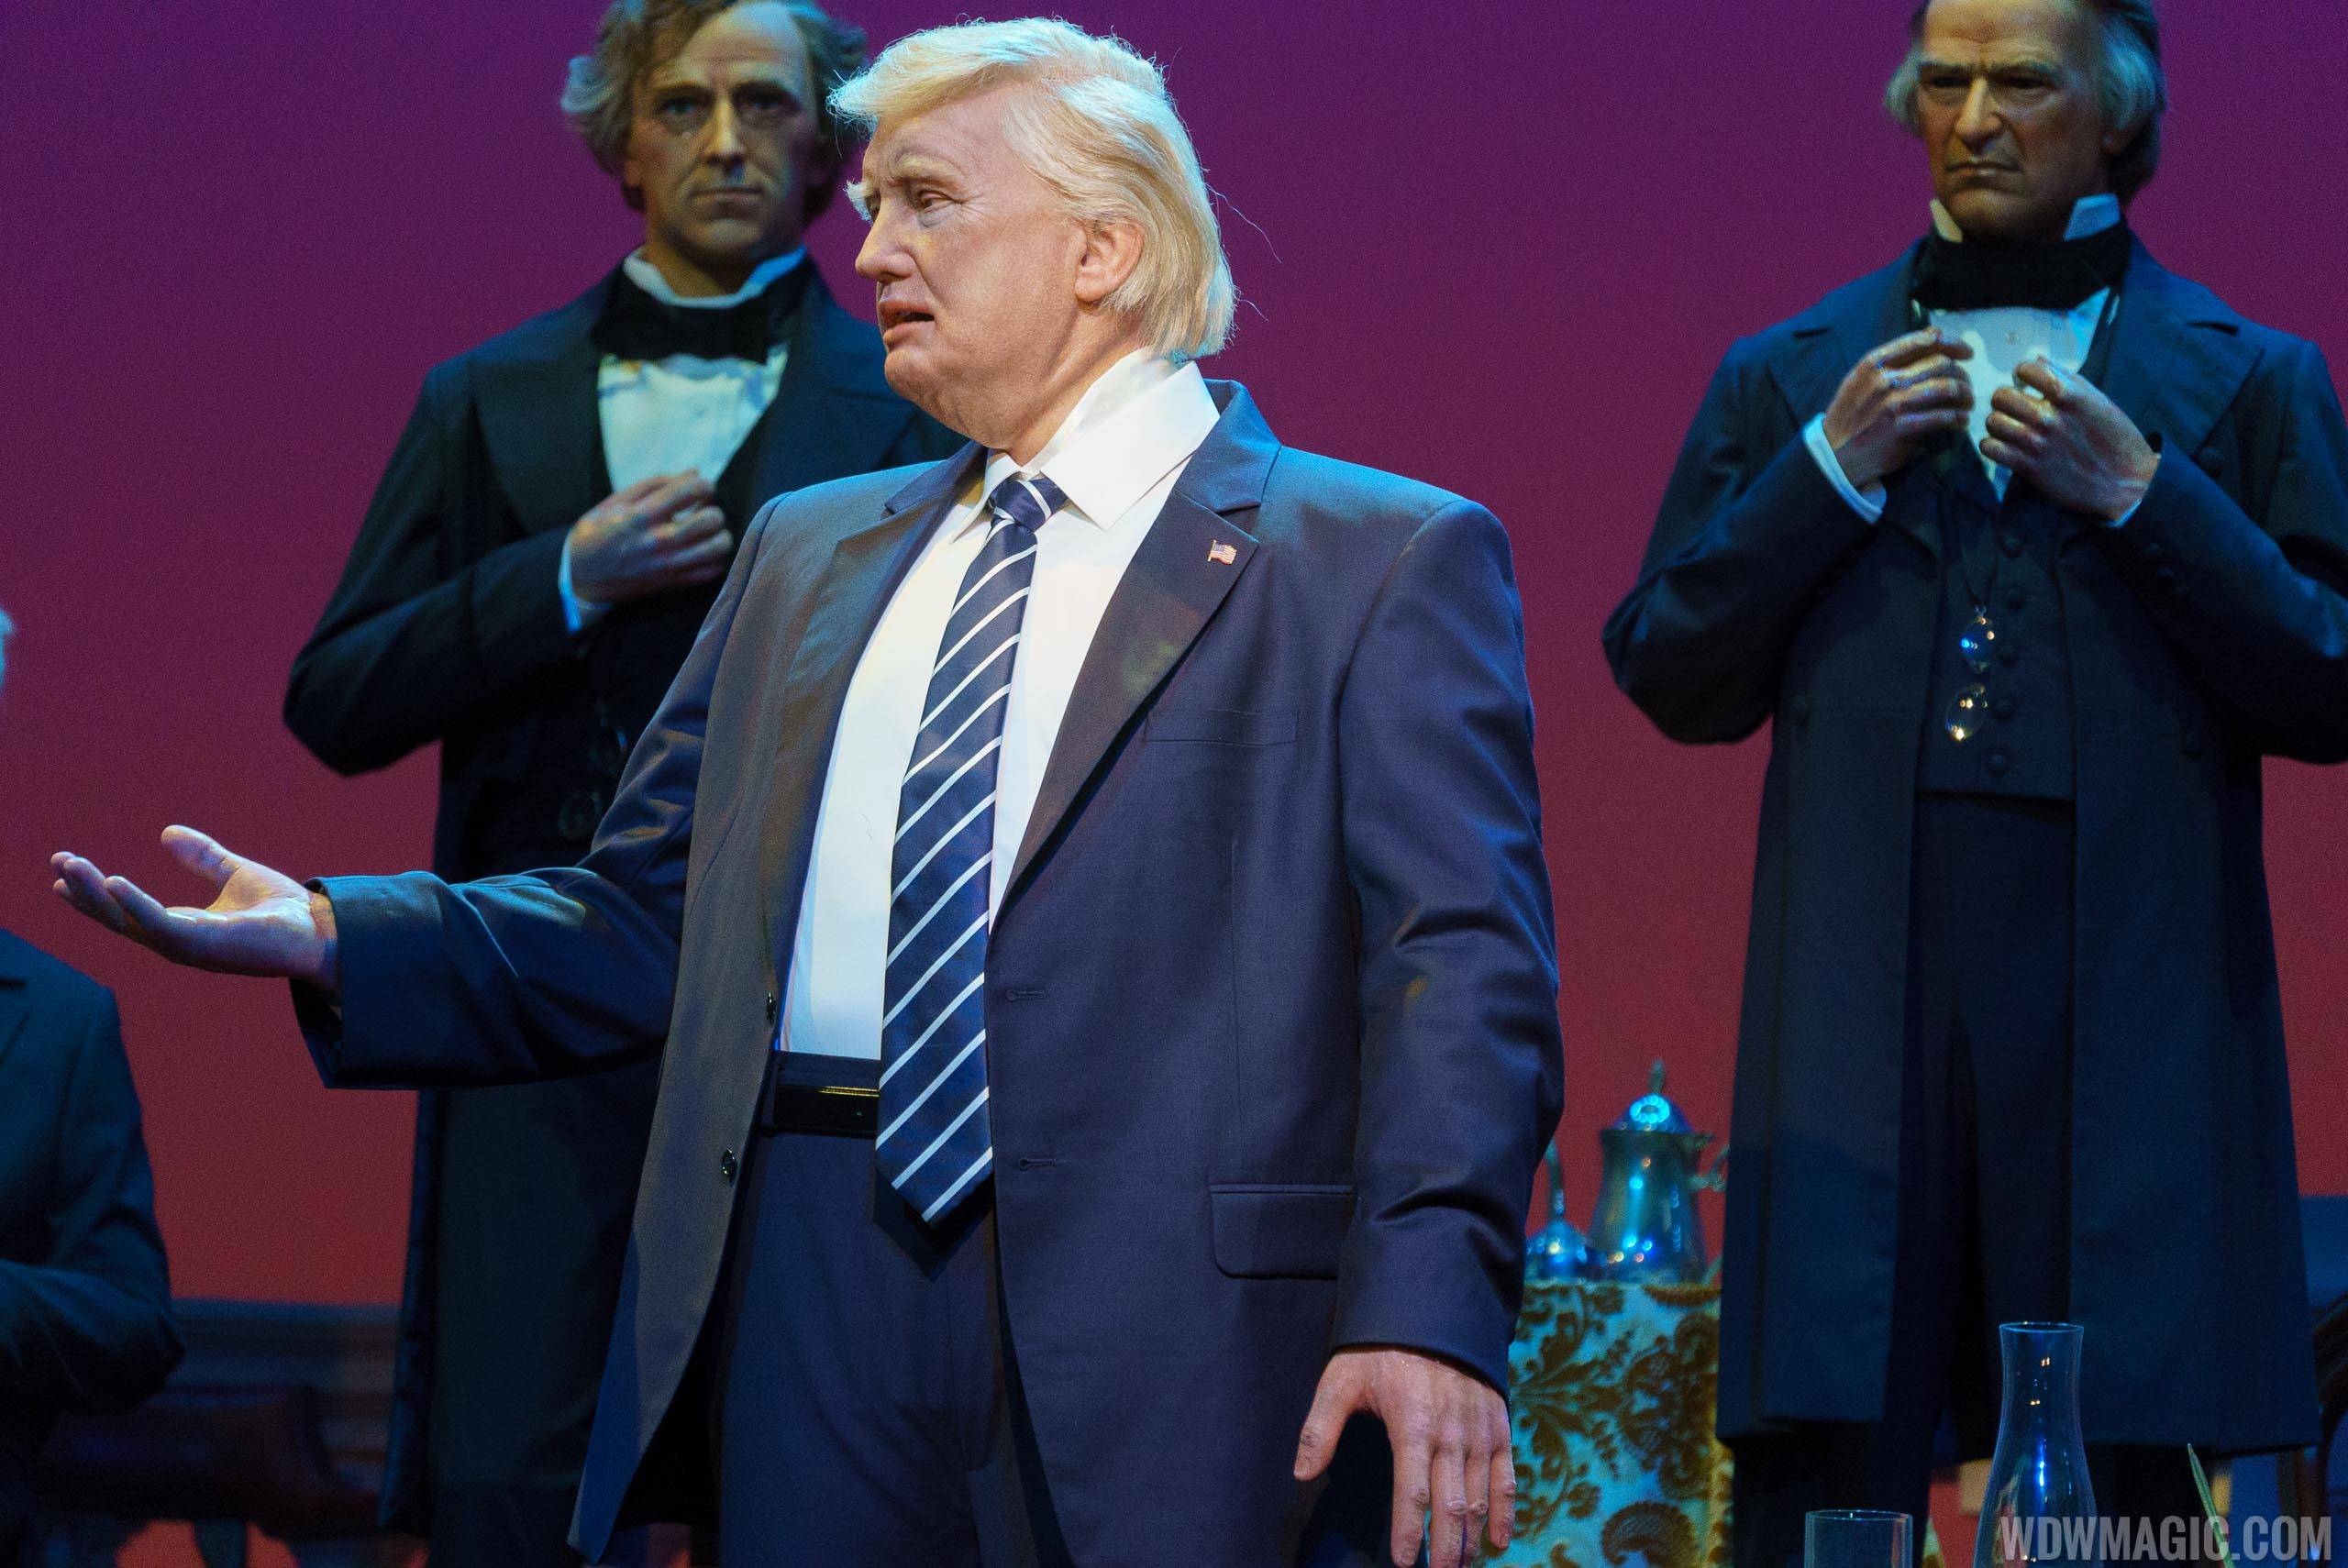 PHOTOS - Donald Trump audio-animatronic figure at the Hall of Presidents